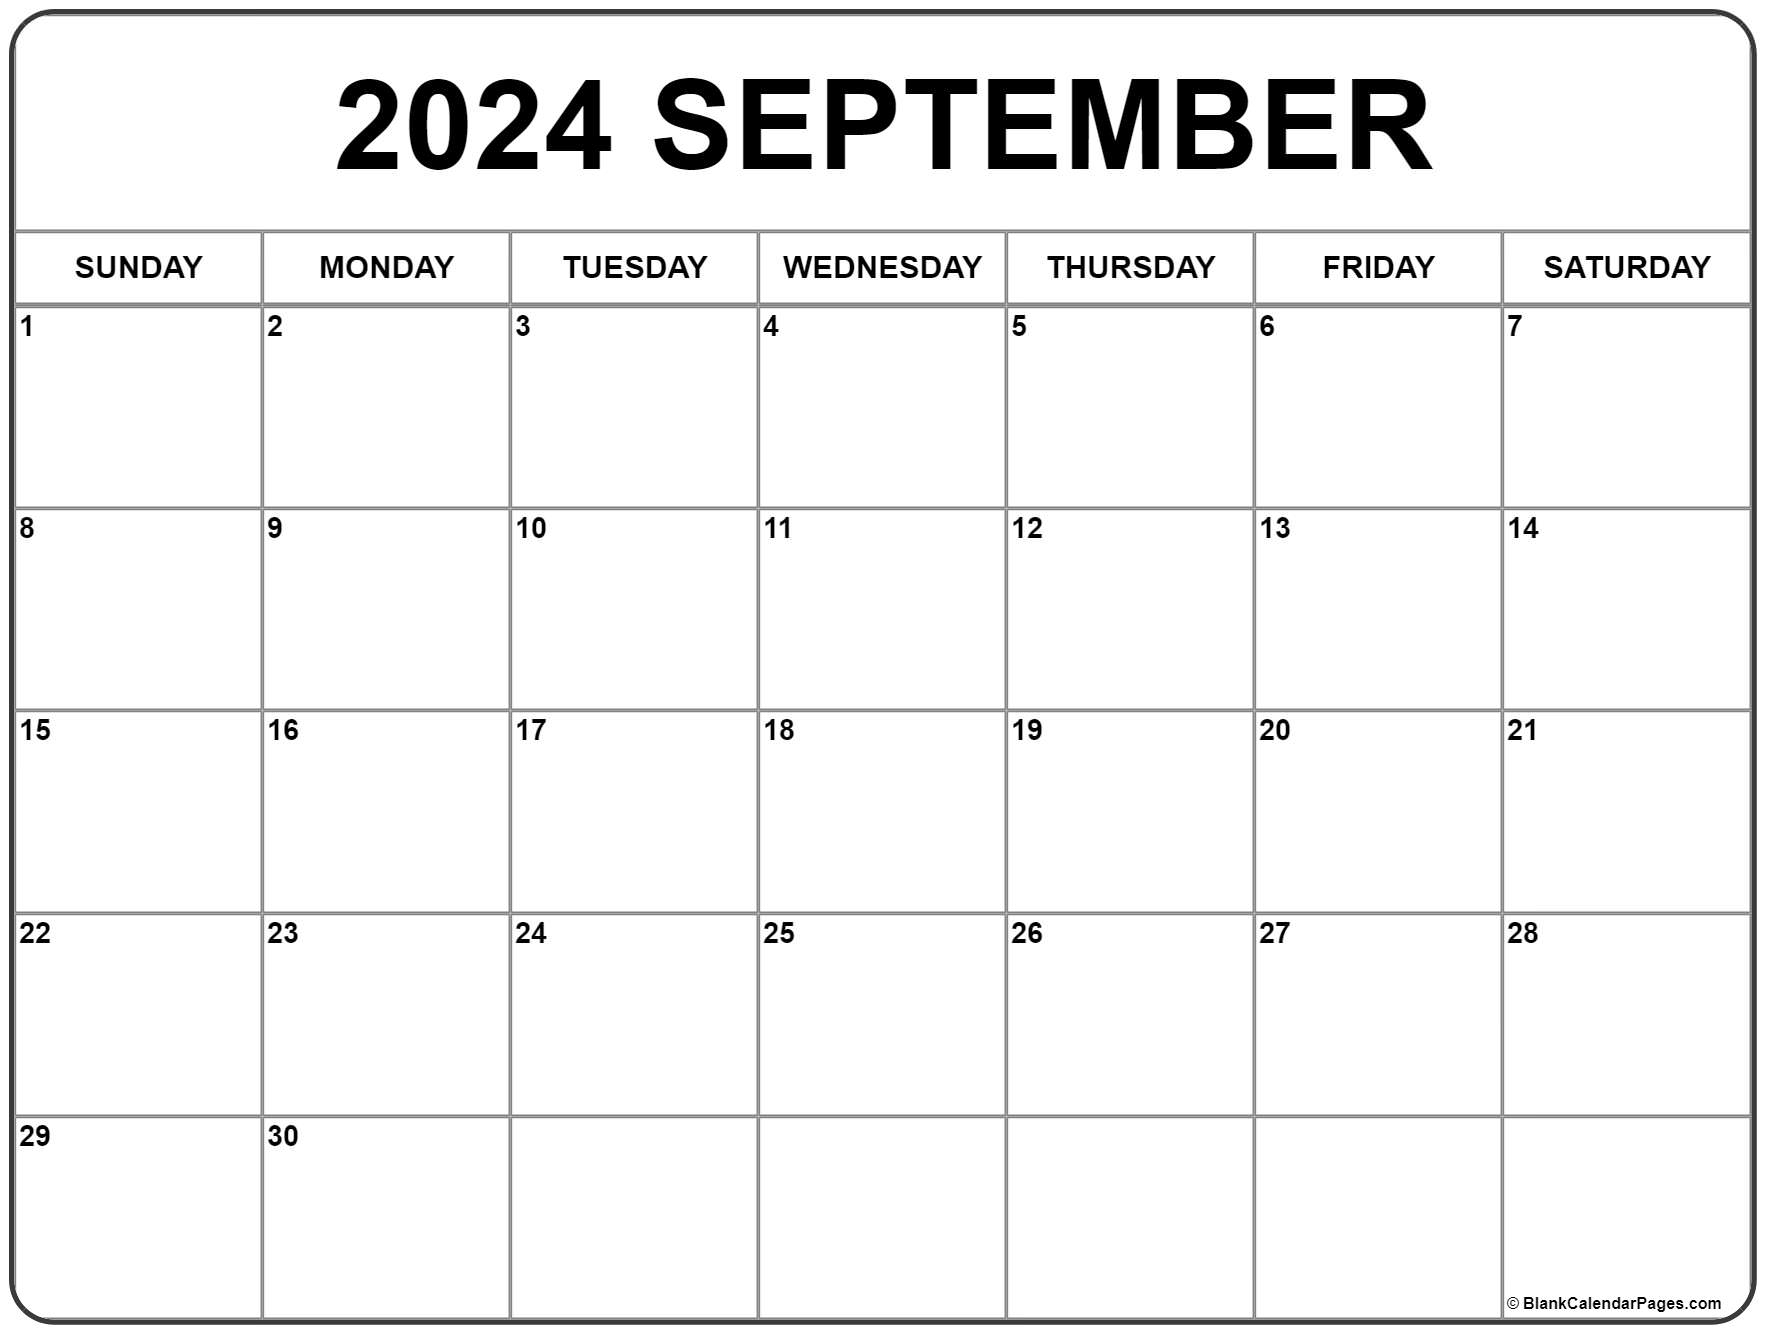 September 2024 Calendar | Free Printable Calendar for September 2024 Calendar Printable Free